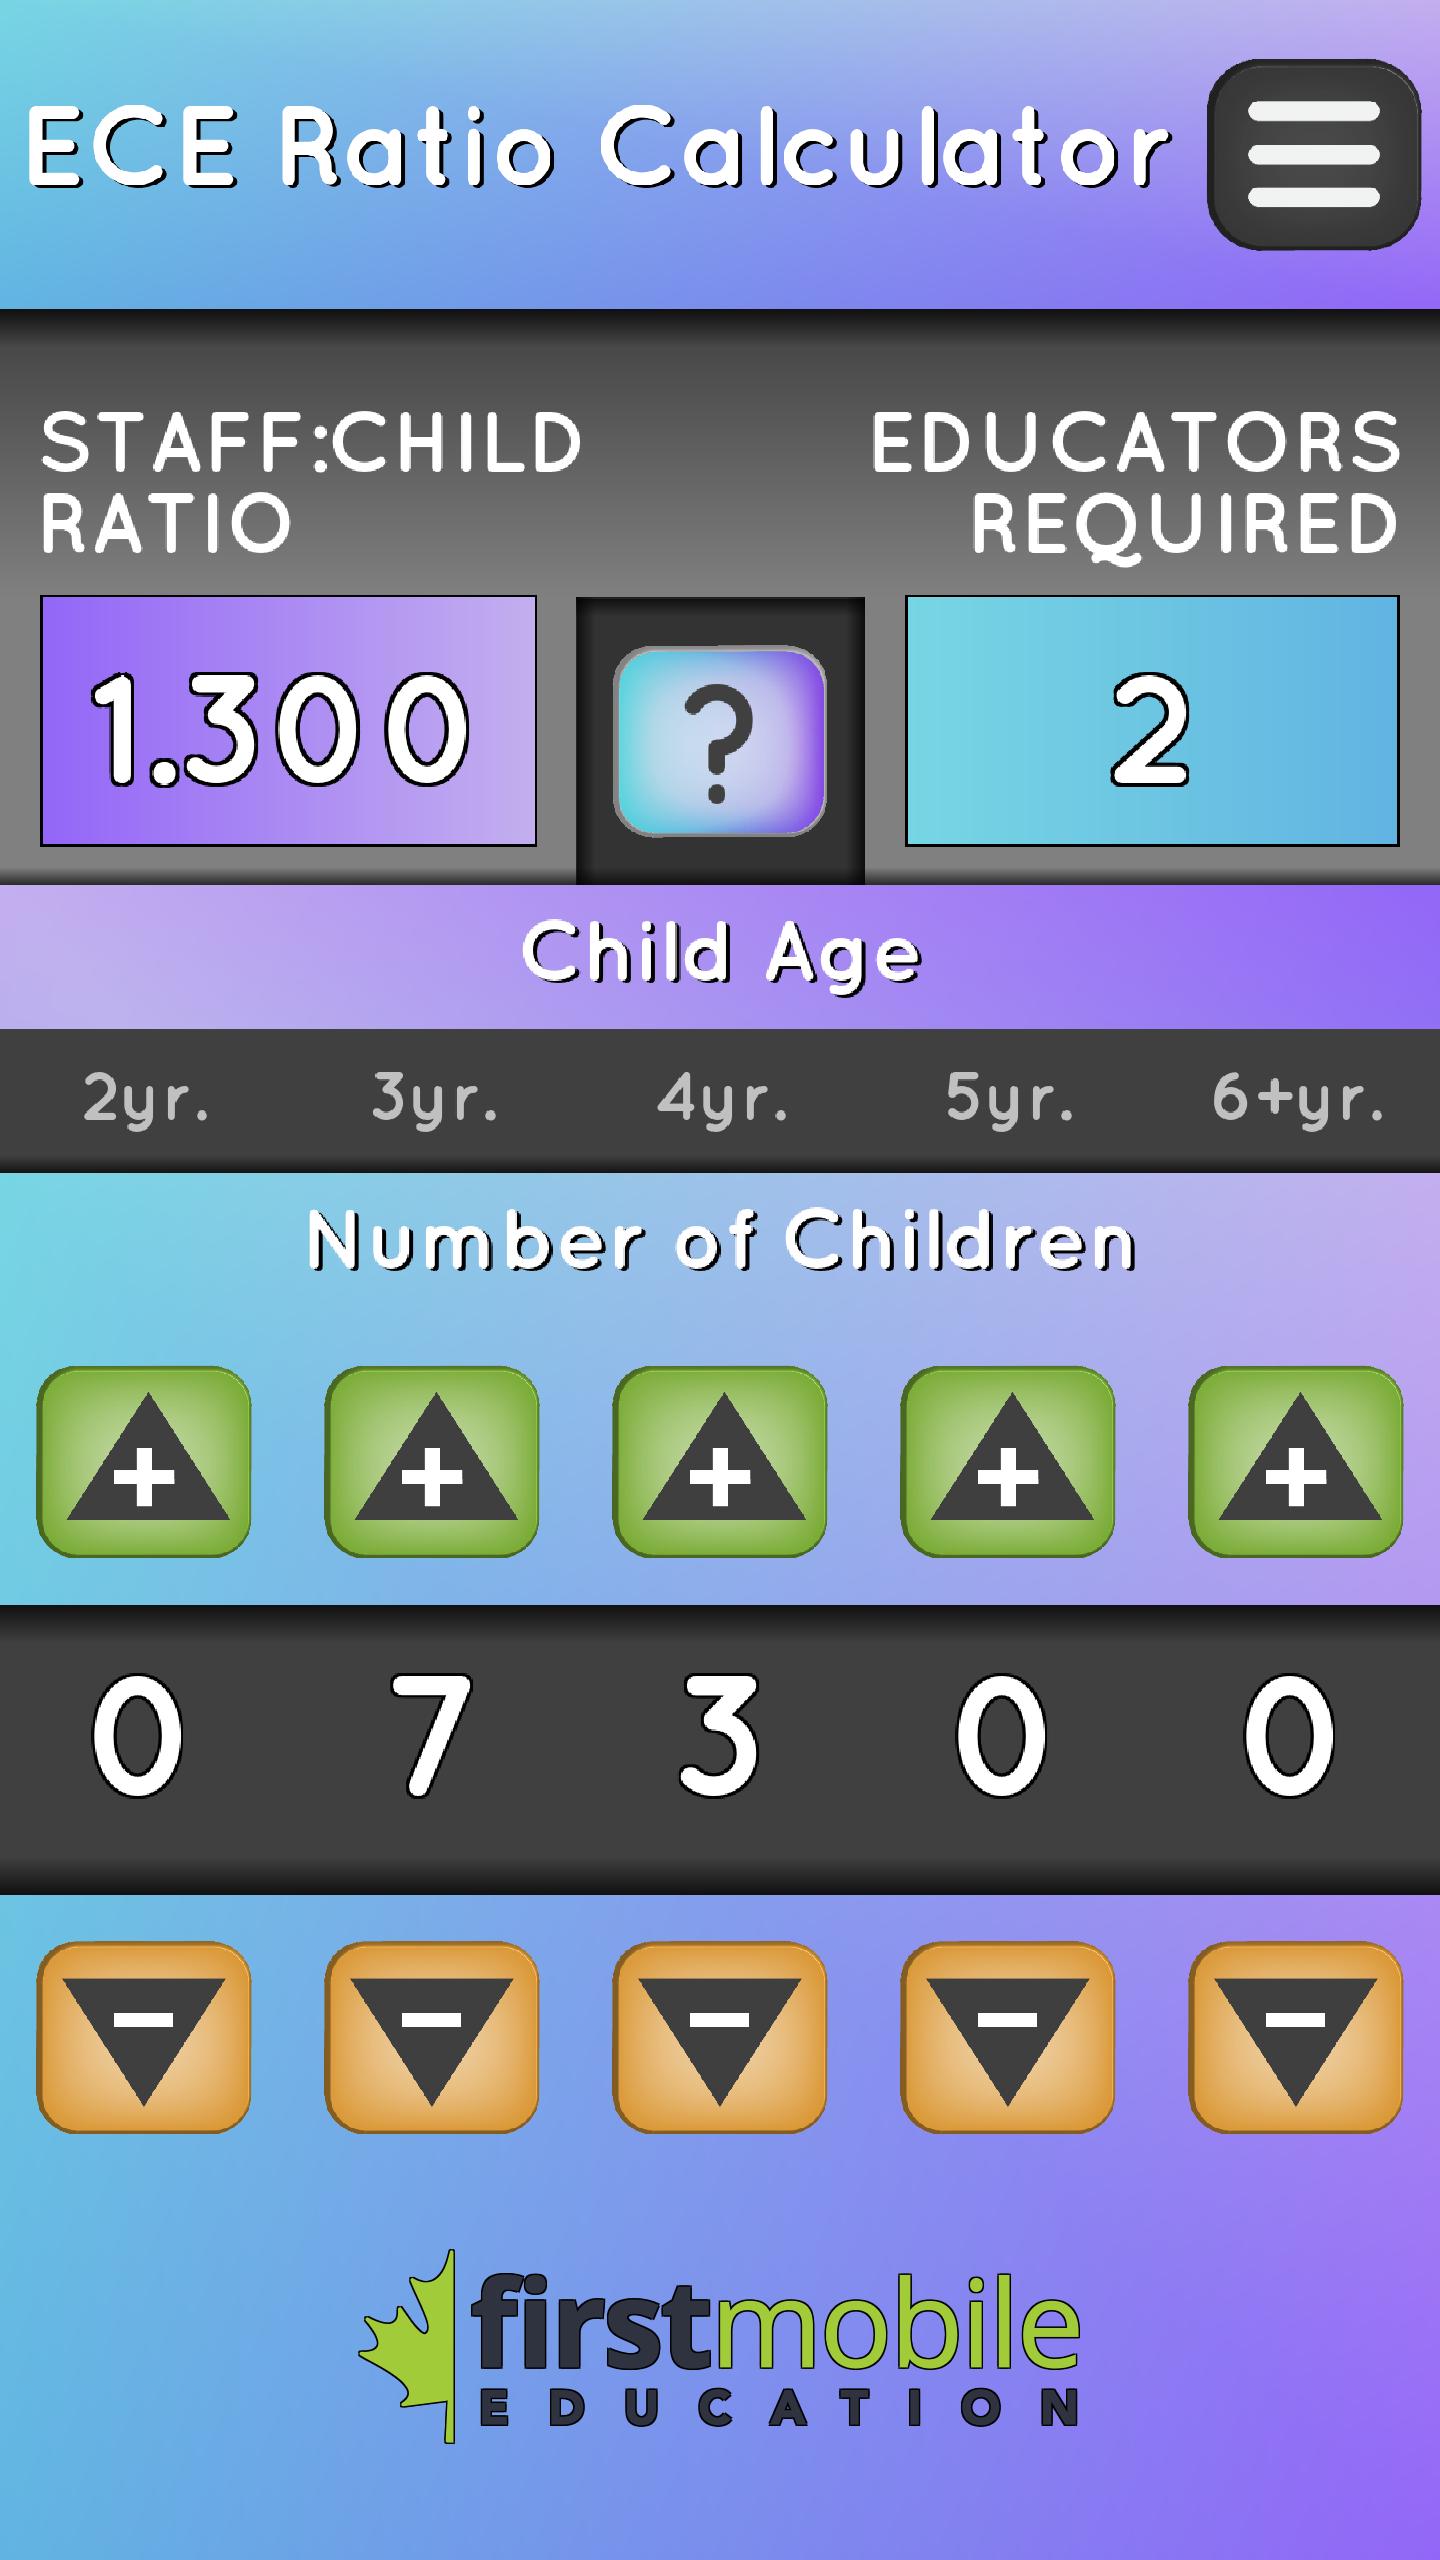 daycare-ratio-calculator-la-ltima-versi-n-1-2-3-para-android